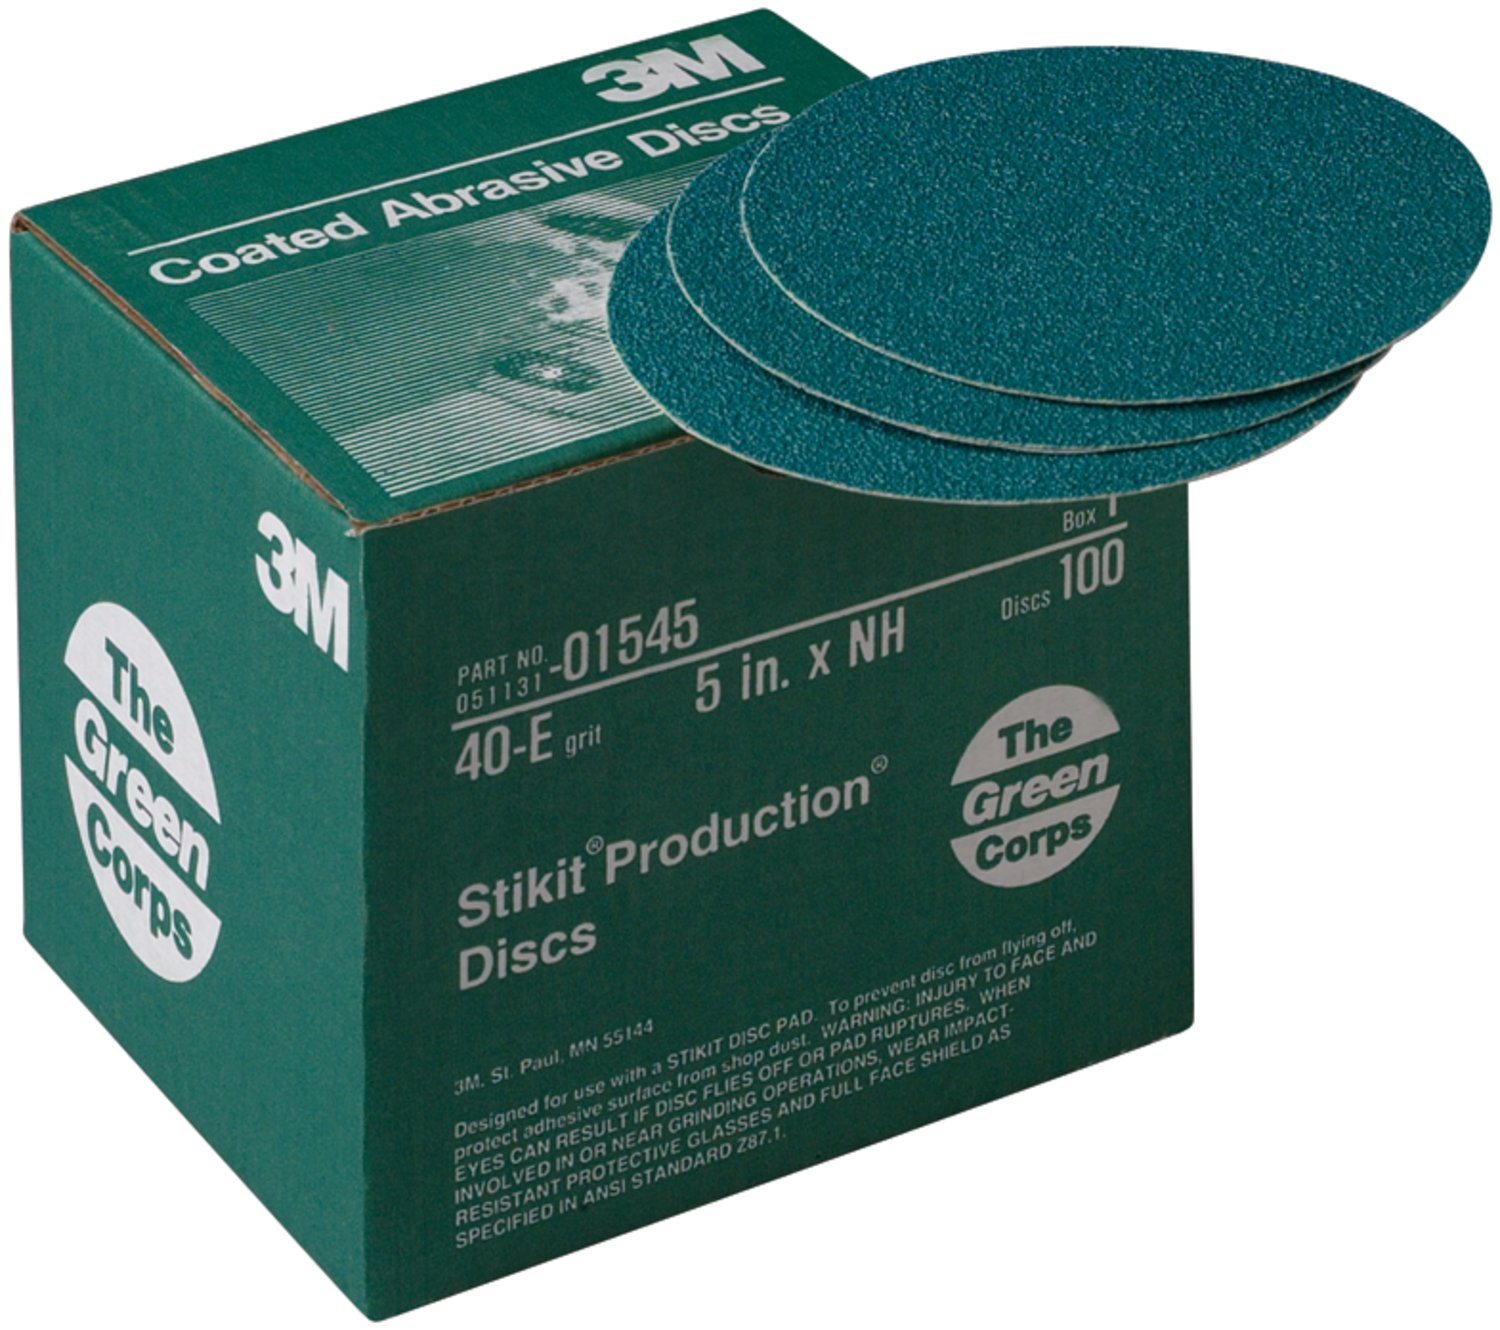 7010363745 - 3M Green Corps Stikit Production Disc, 01545, 5 in, 40 grit, 100
discs per carton, 5 cartons per case